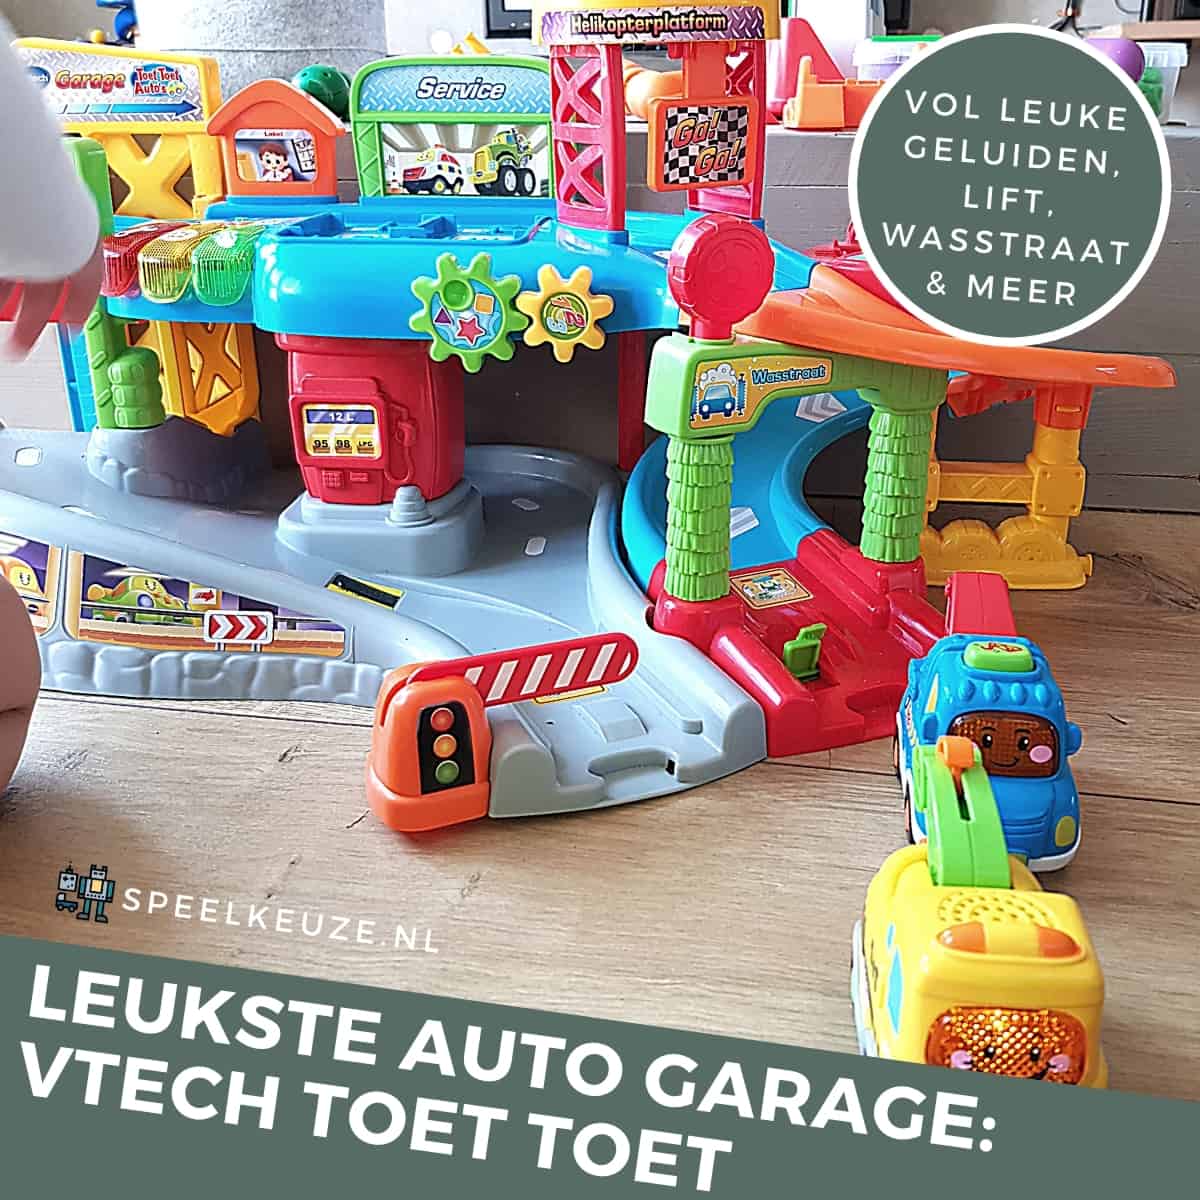 Best car garage: VTech Toet Toet Auto garage